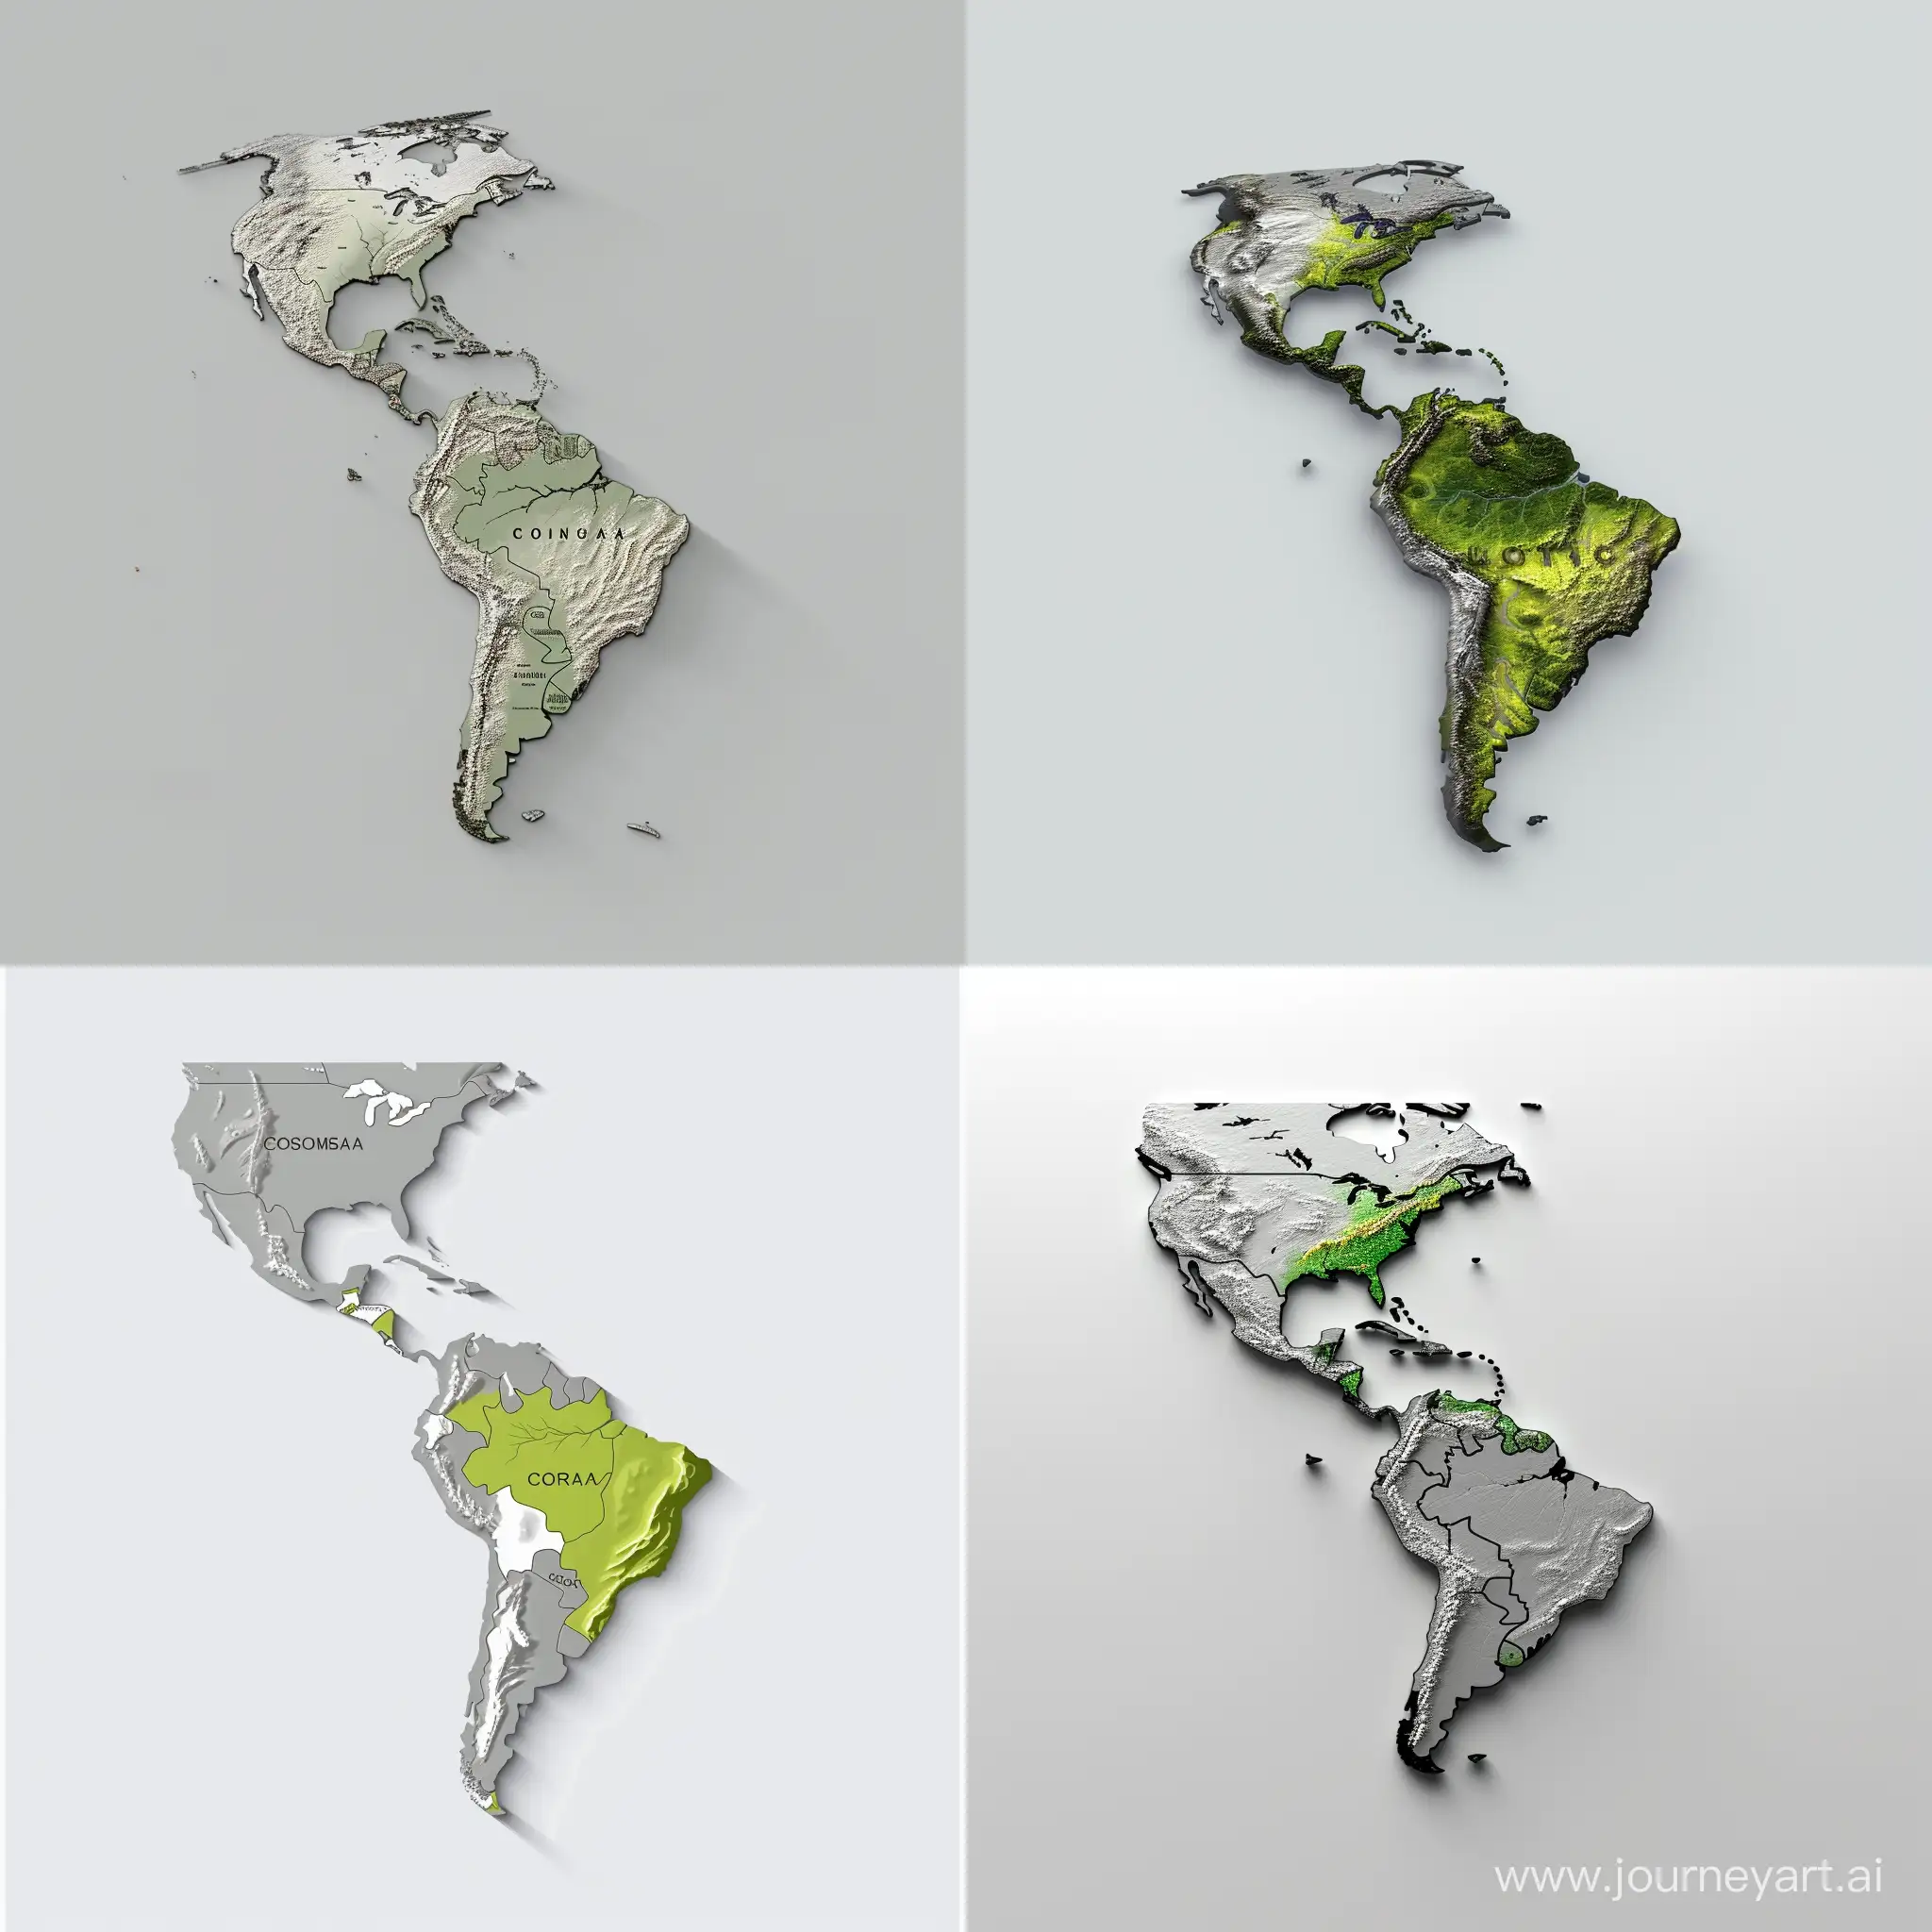 Vibrant-Green-Earth-Map-of-Costa-Rica-Guatemala-Colombia-and-Ecuador